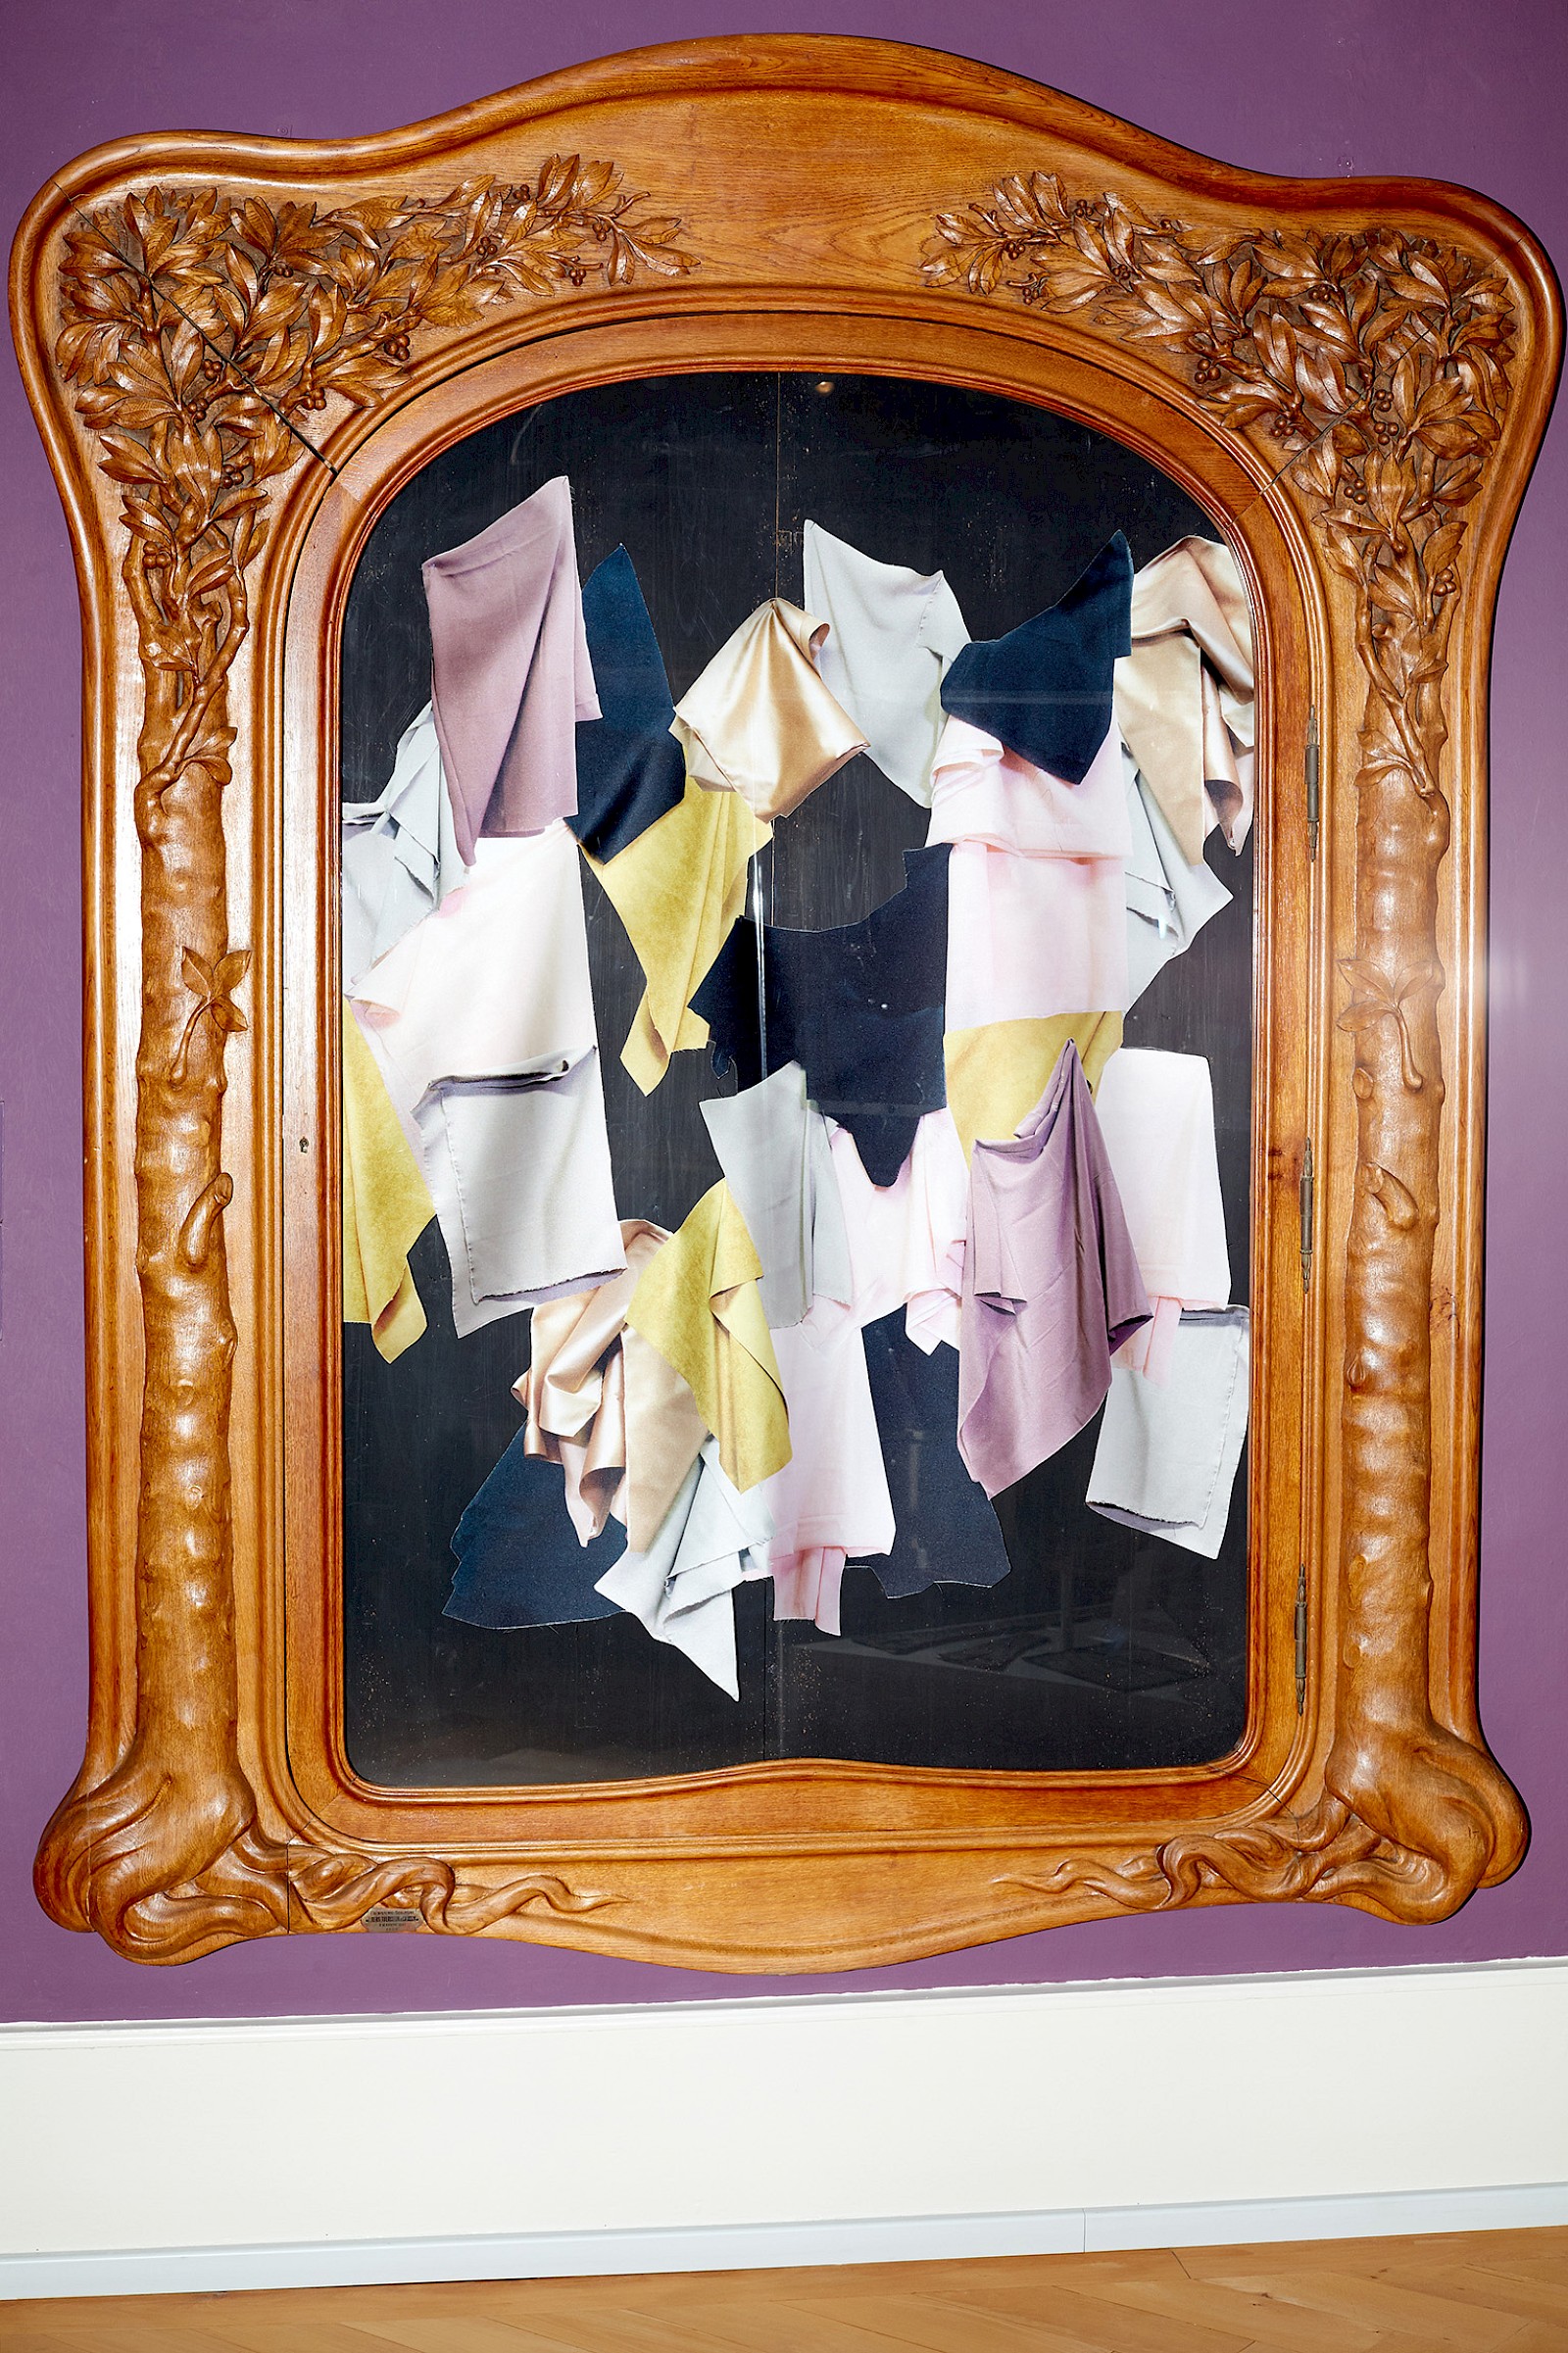 Image - Fabric Project (Textile) in Art Nouveau cabinet